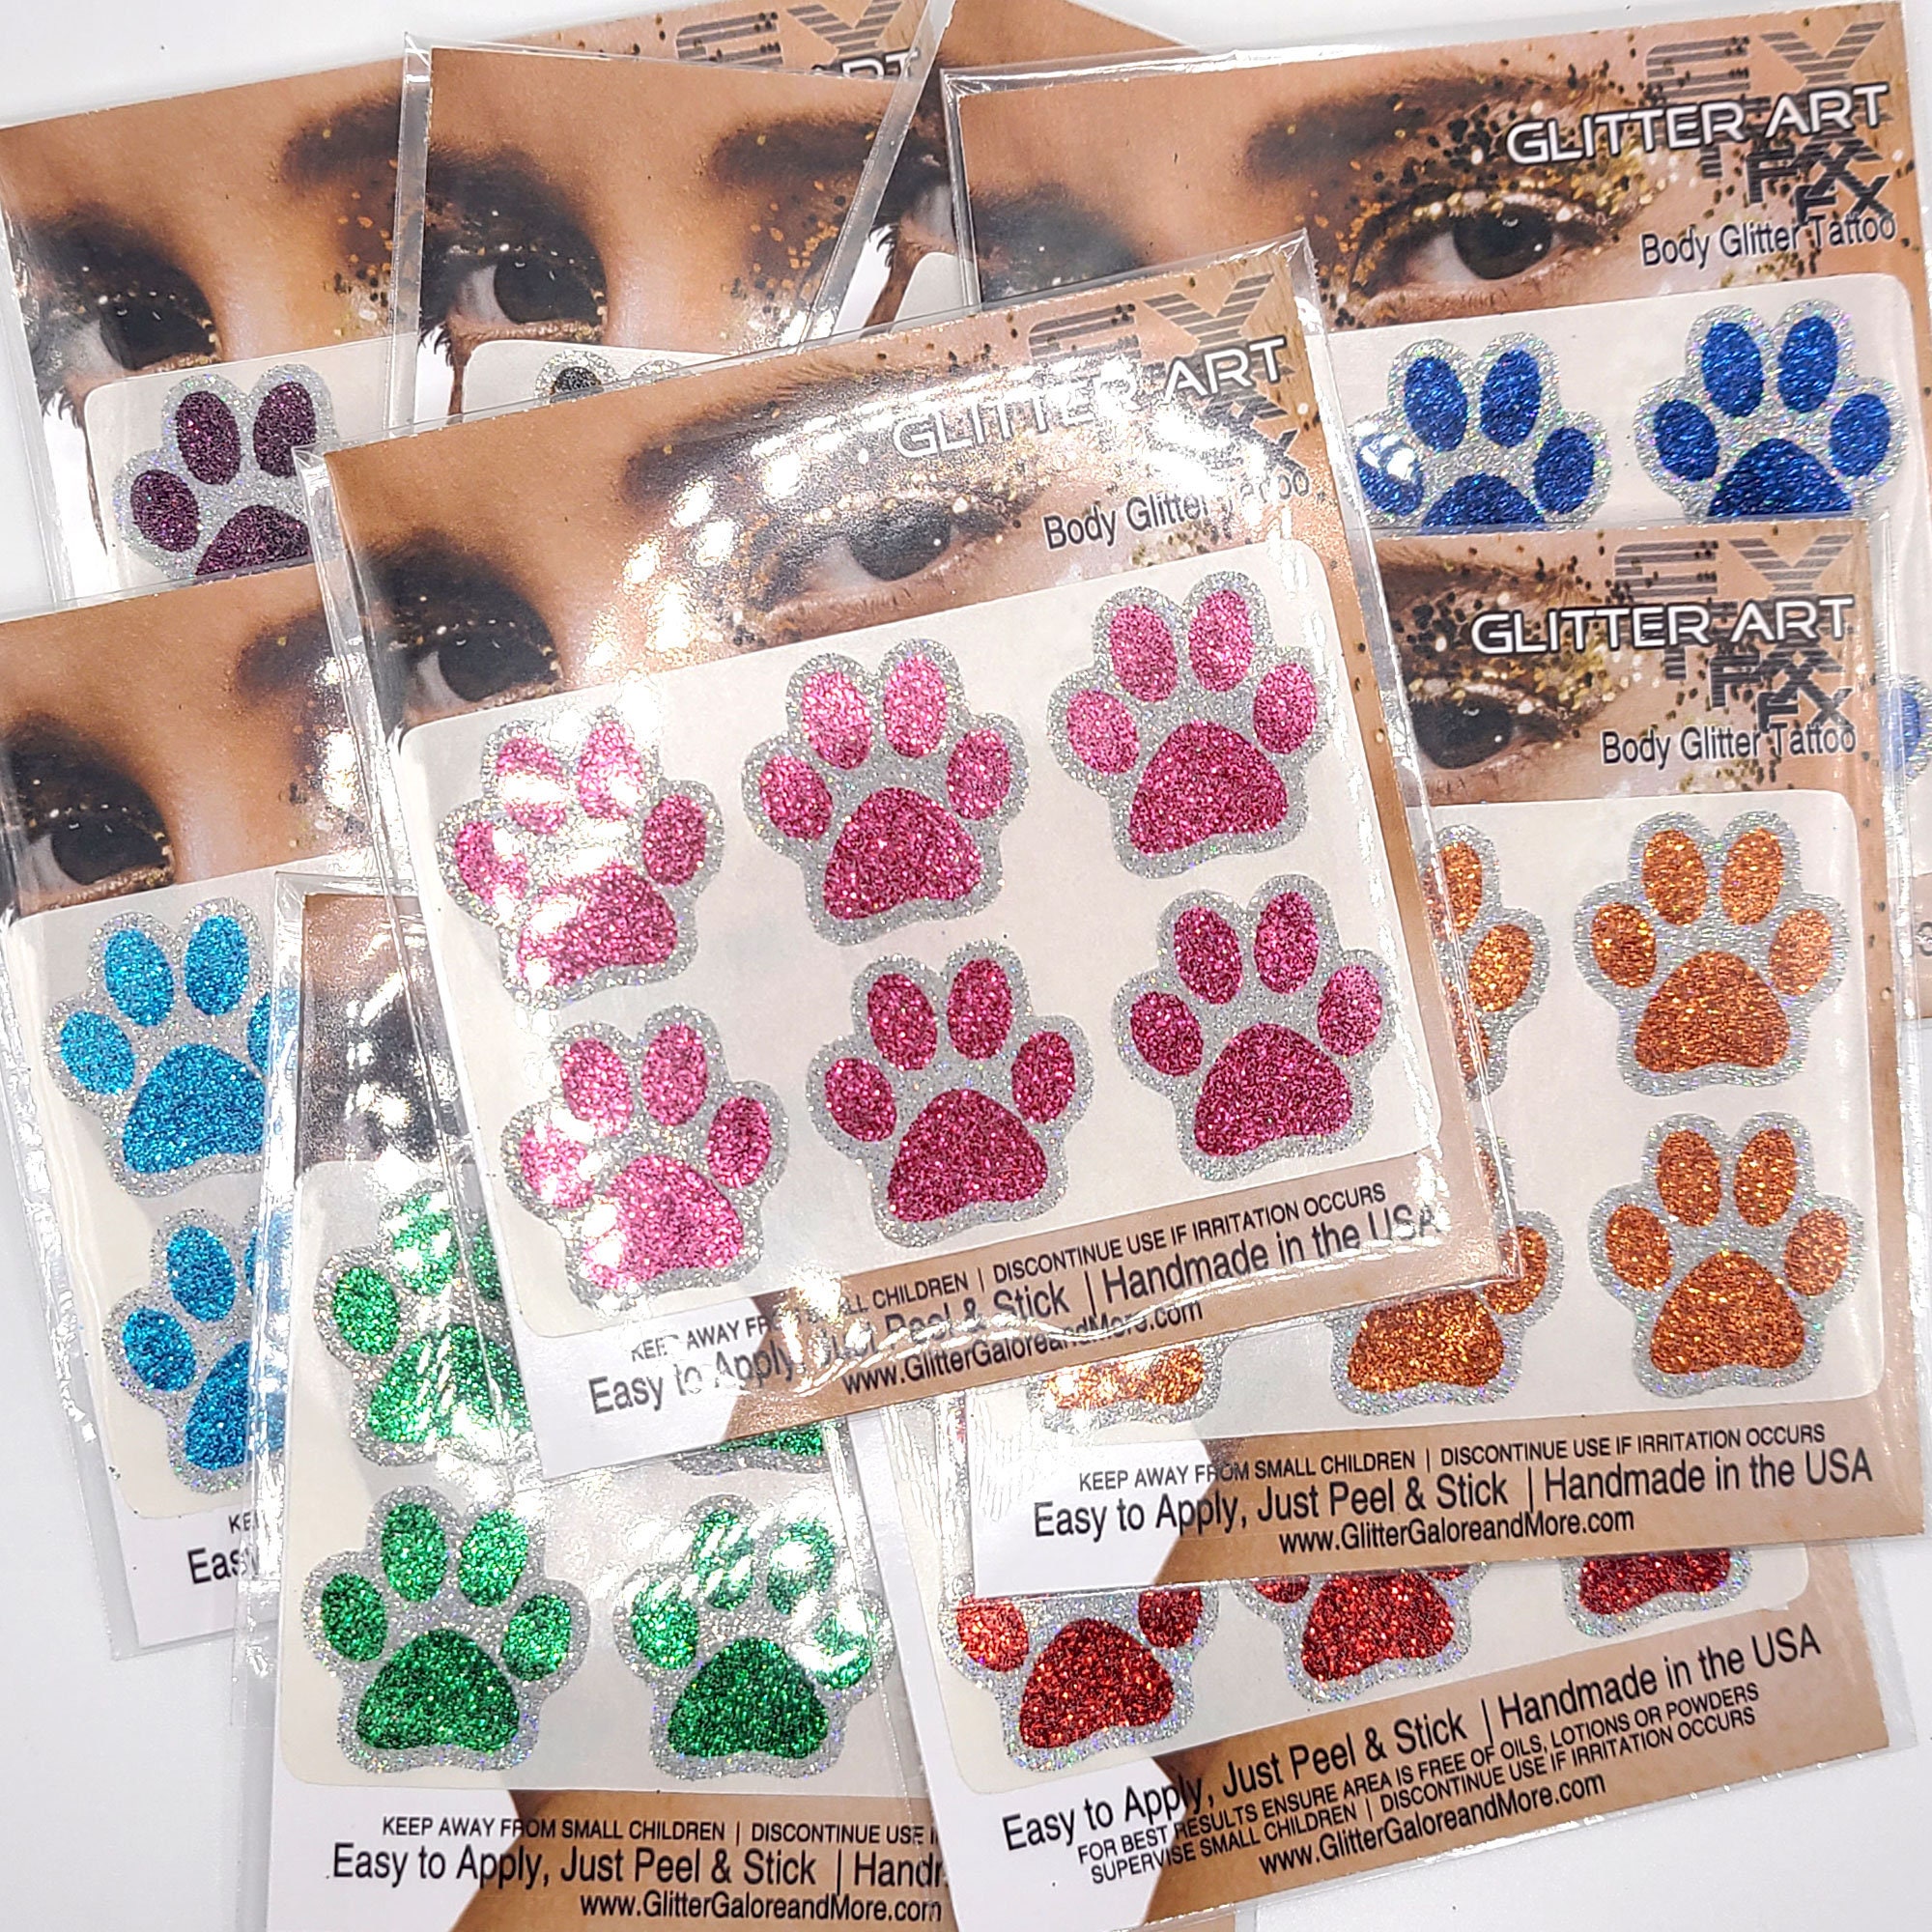 New Original Paw Puppy Patrol Toys Tattoo Sticker Pat Patrouille Anime  Stickers Toys for Children Boys